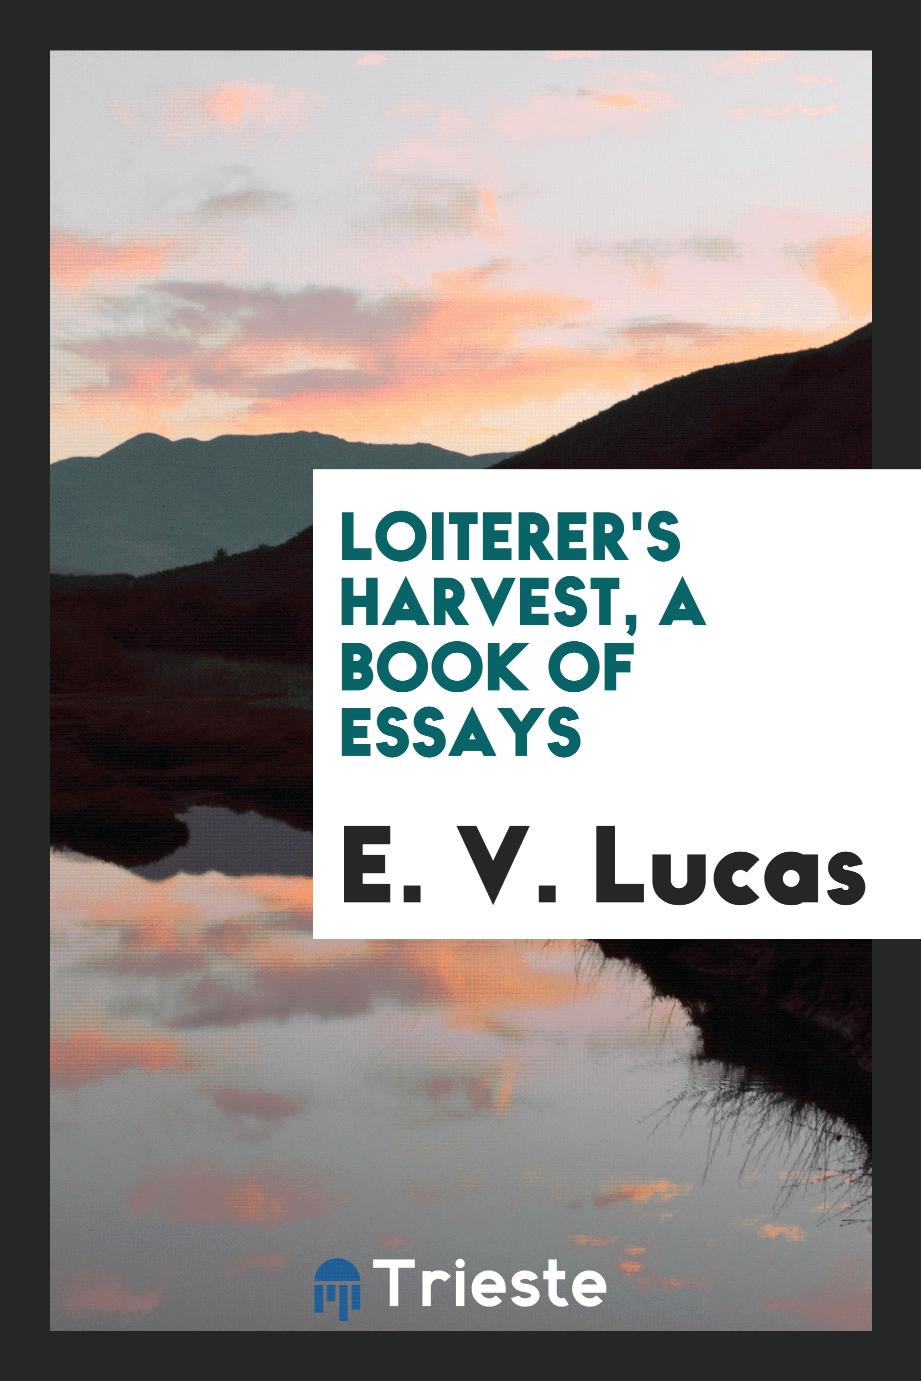 Loiterer's harvest, a book of essays